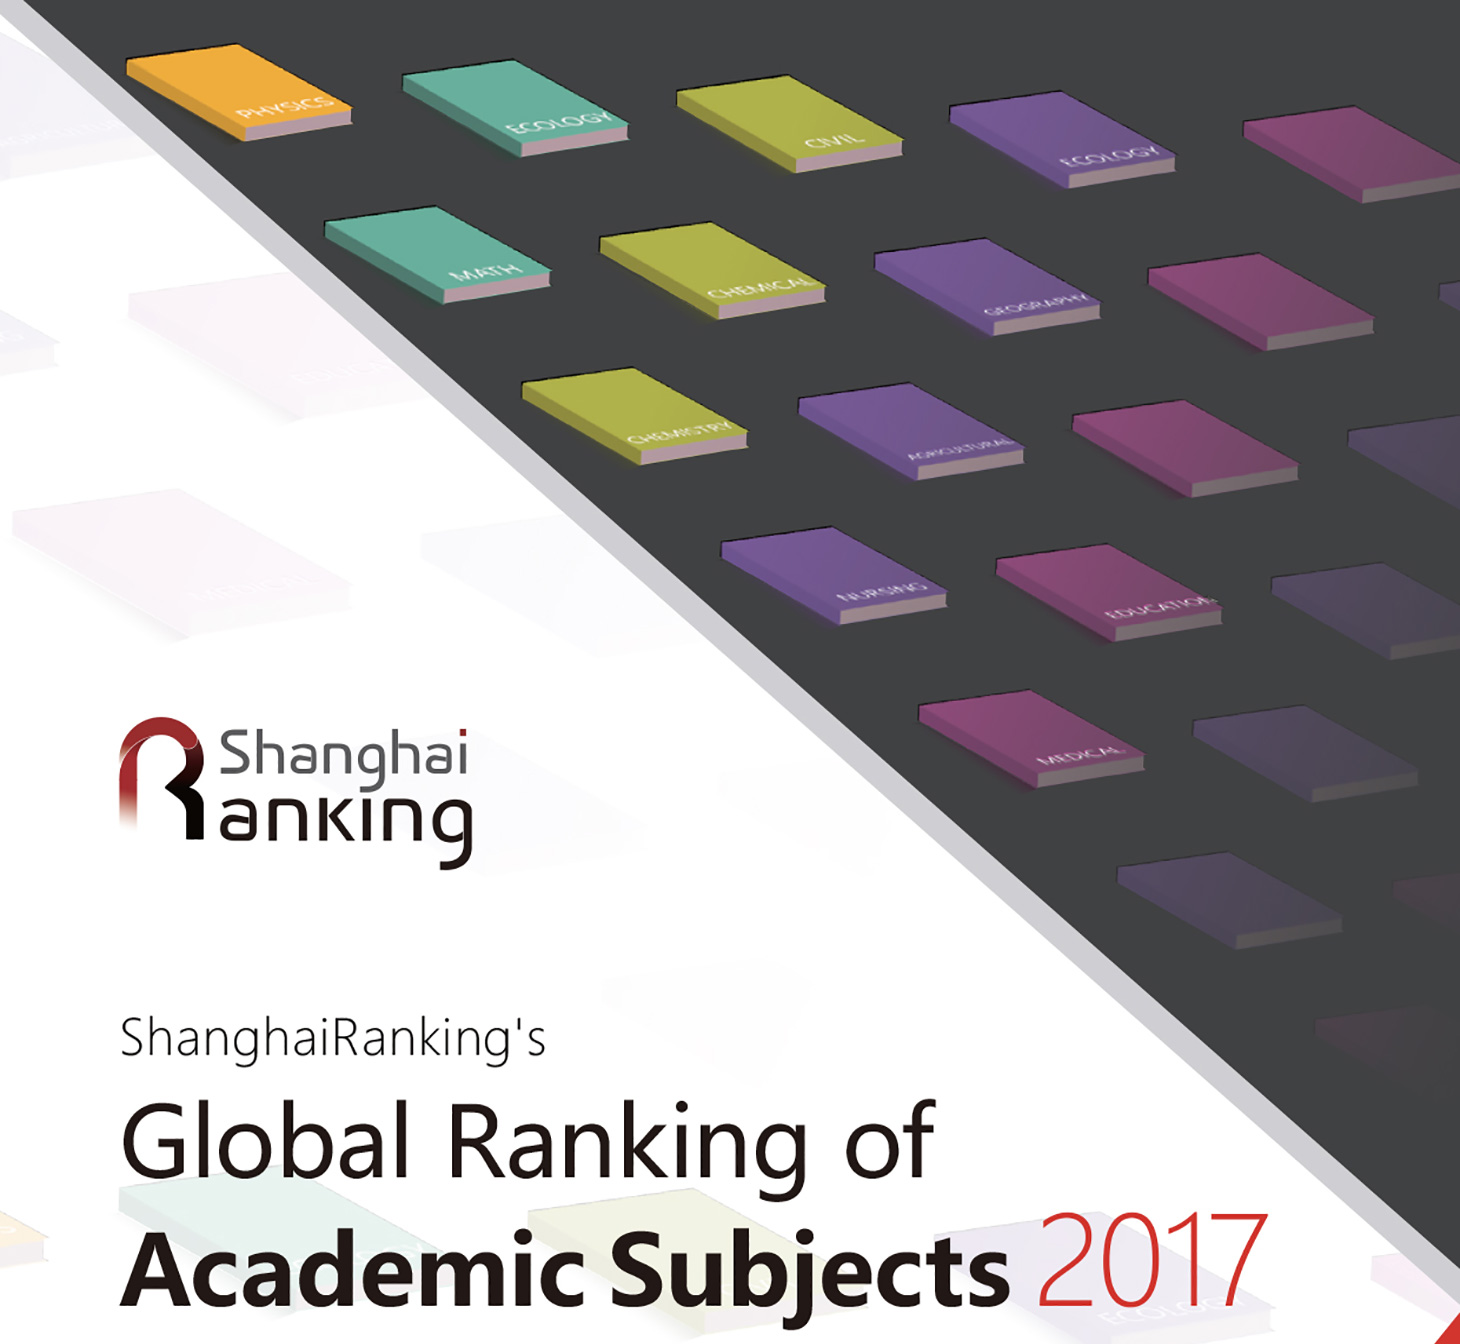 Classement de Shanghaï 2017 - Visuel des classements thématiques